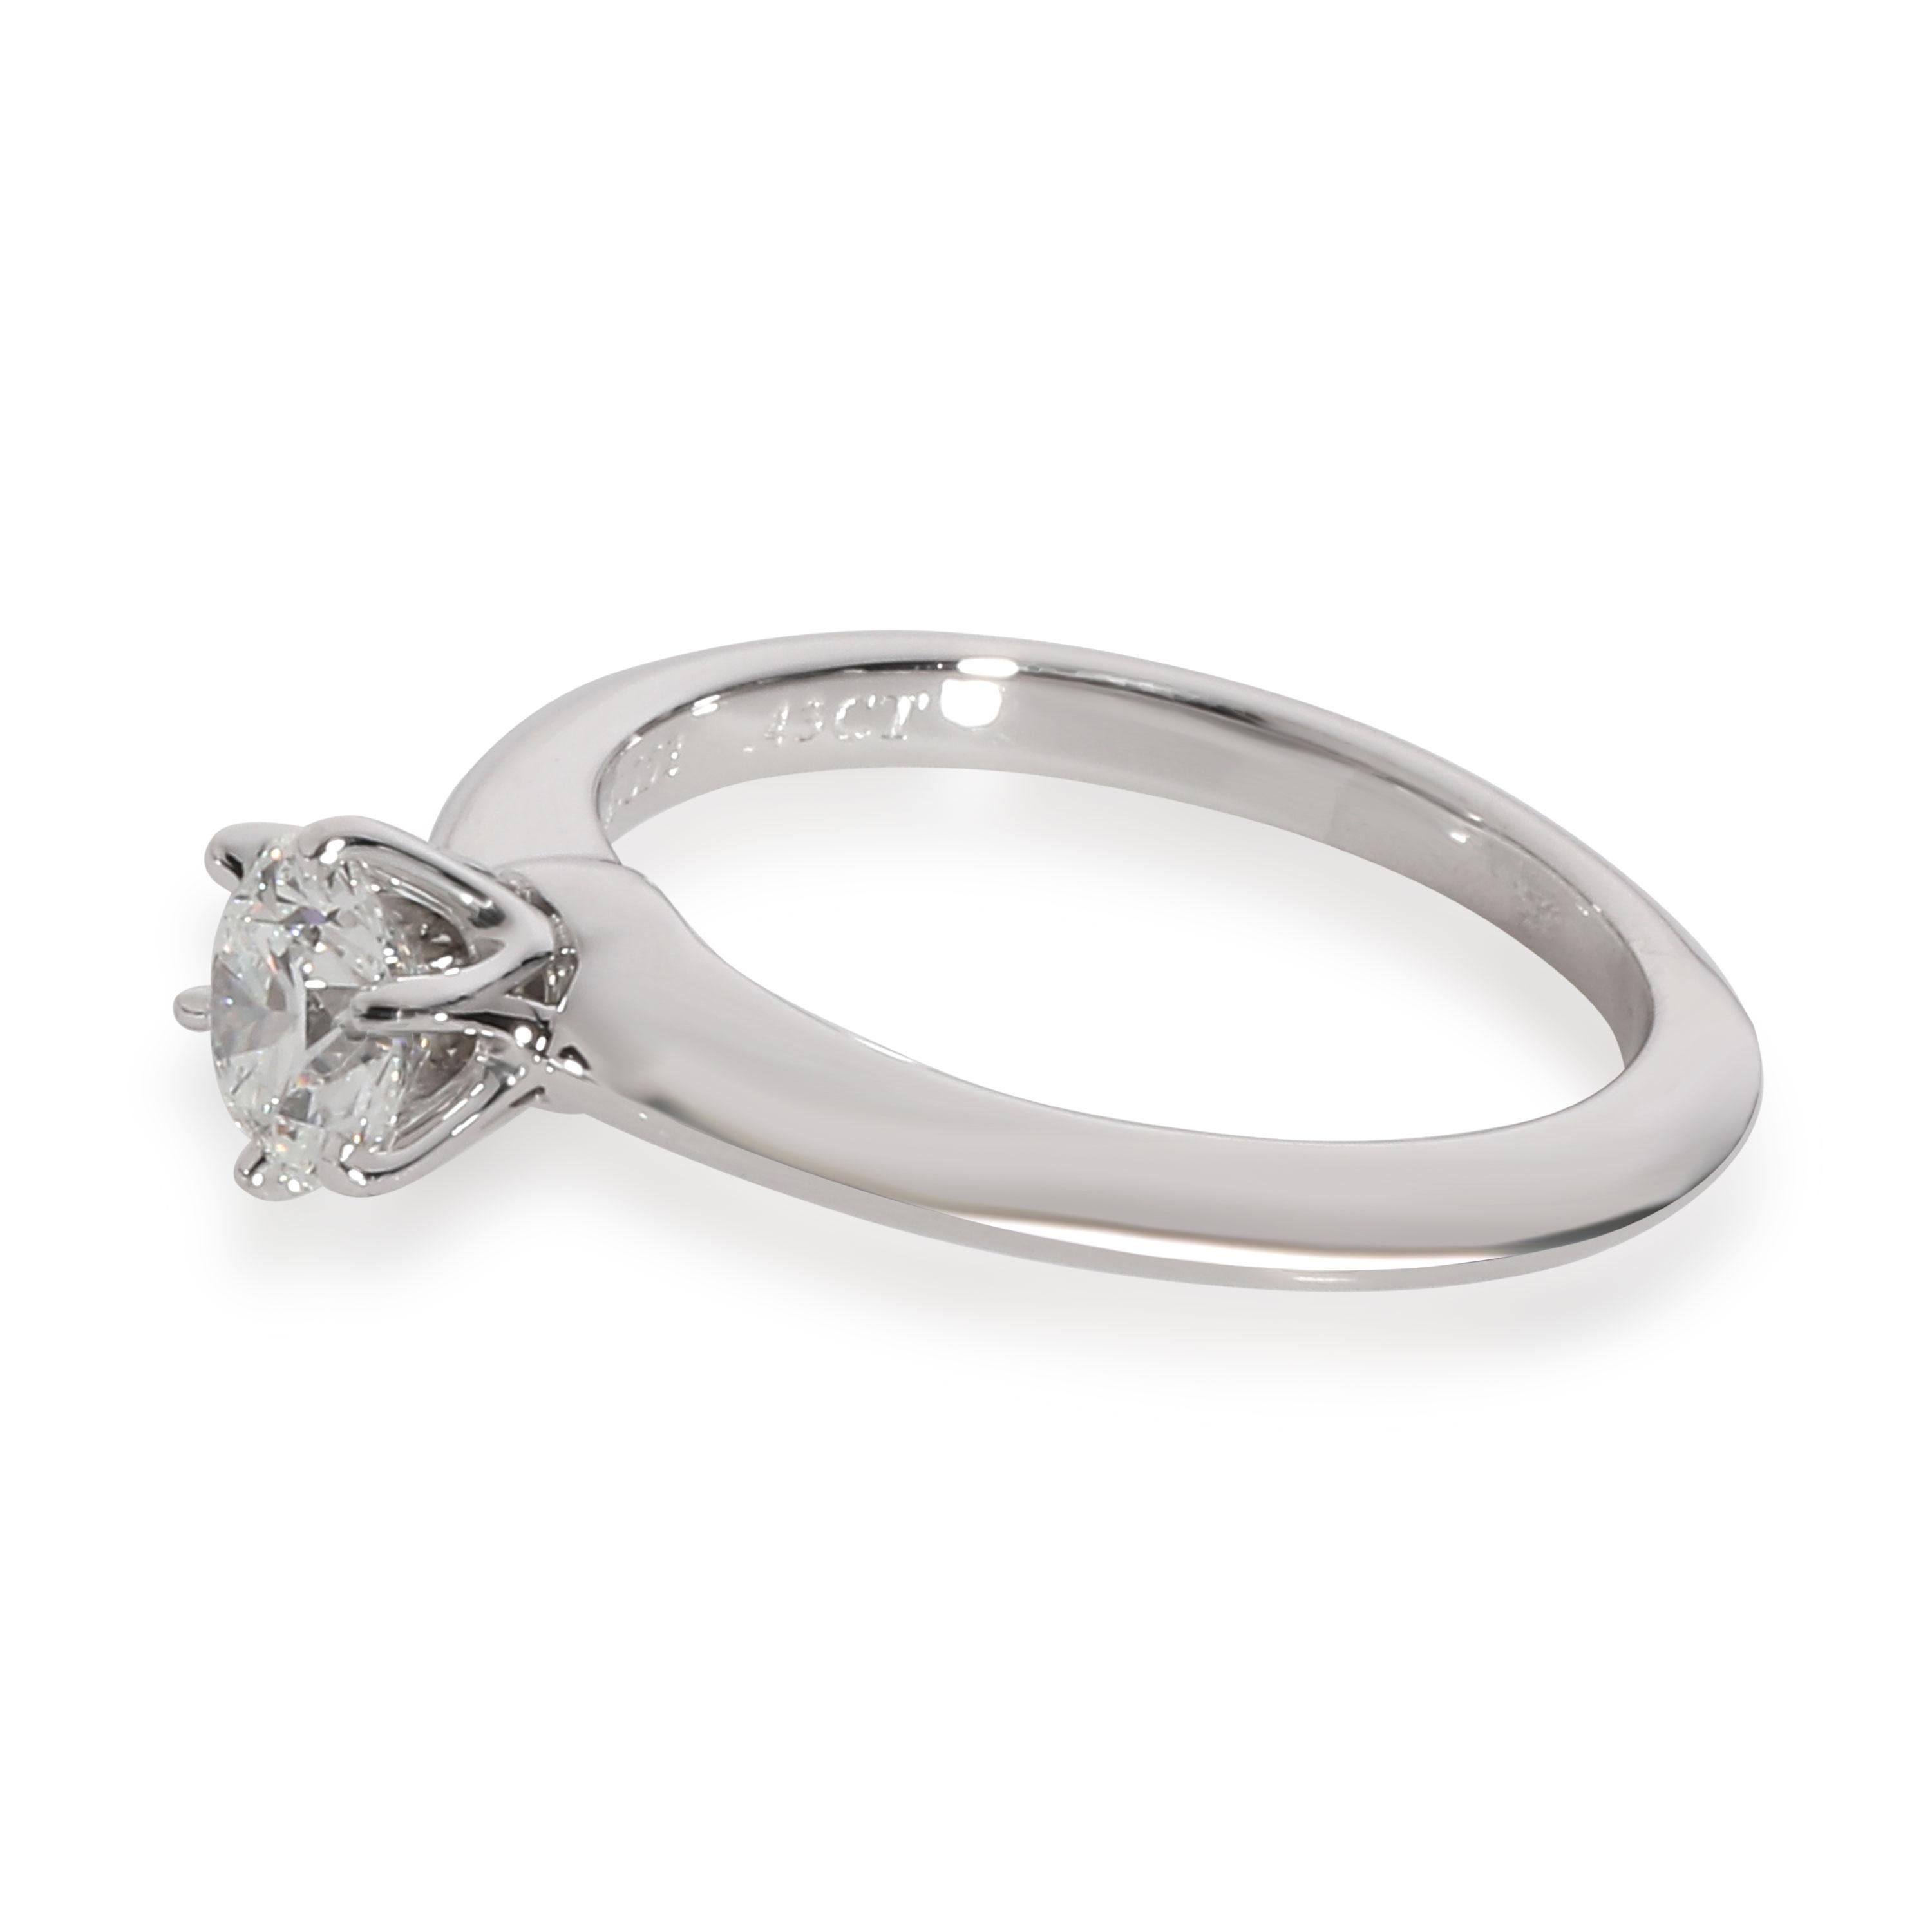 Round Cut Tiffany & Co. Solitaire Diamond Engagement Ring in Platinum E VVS2 0.43 Carat